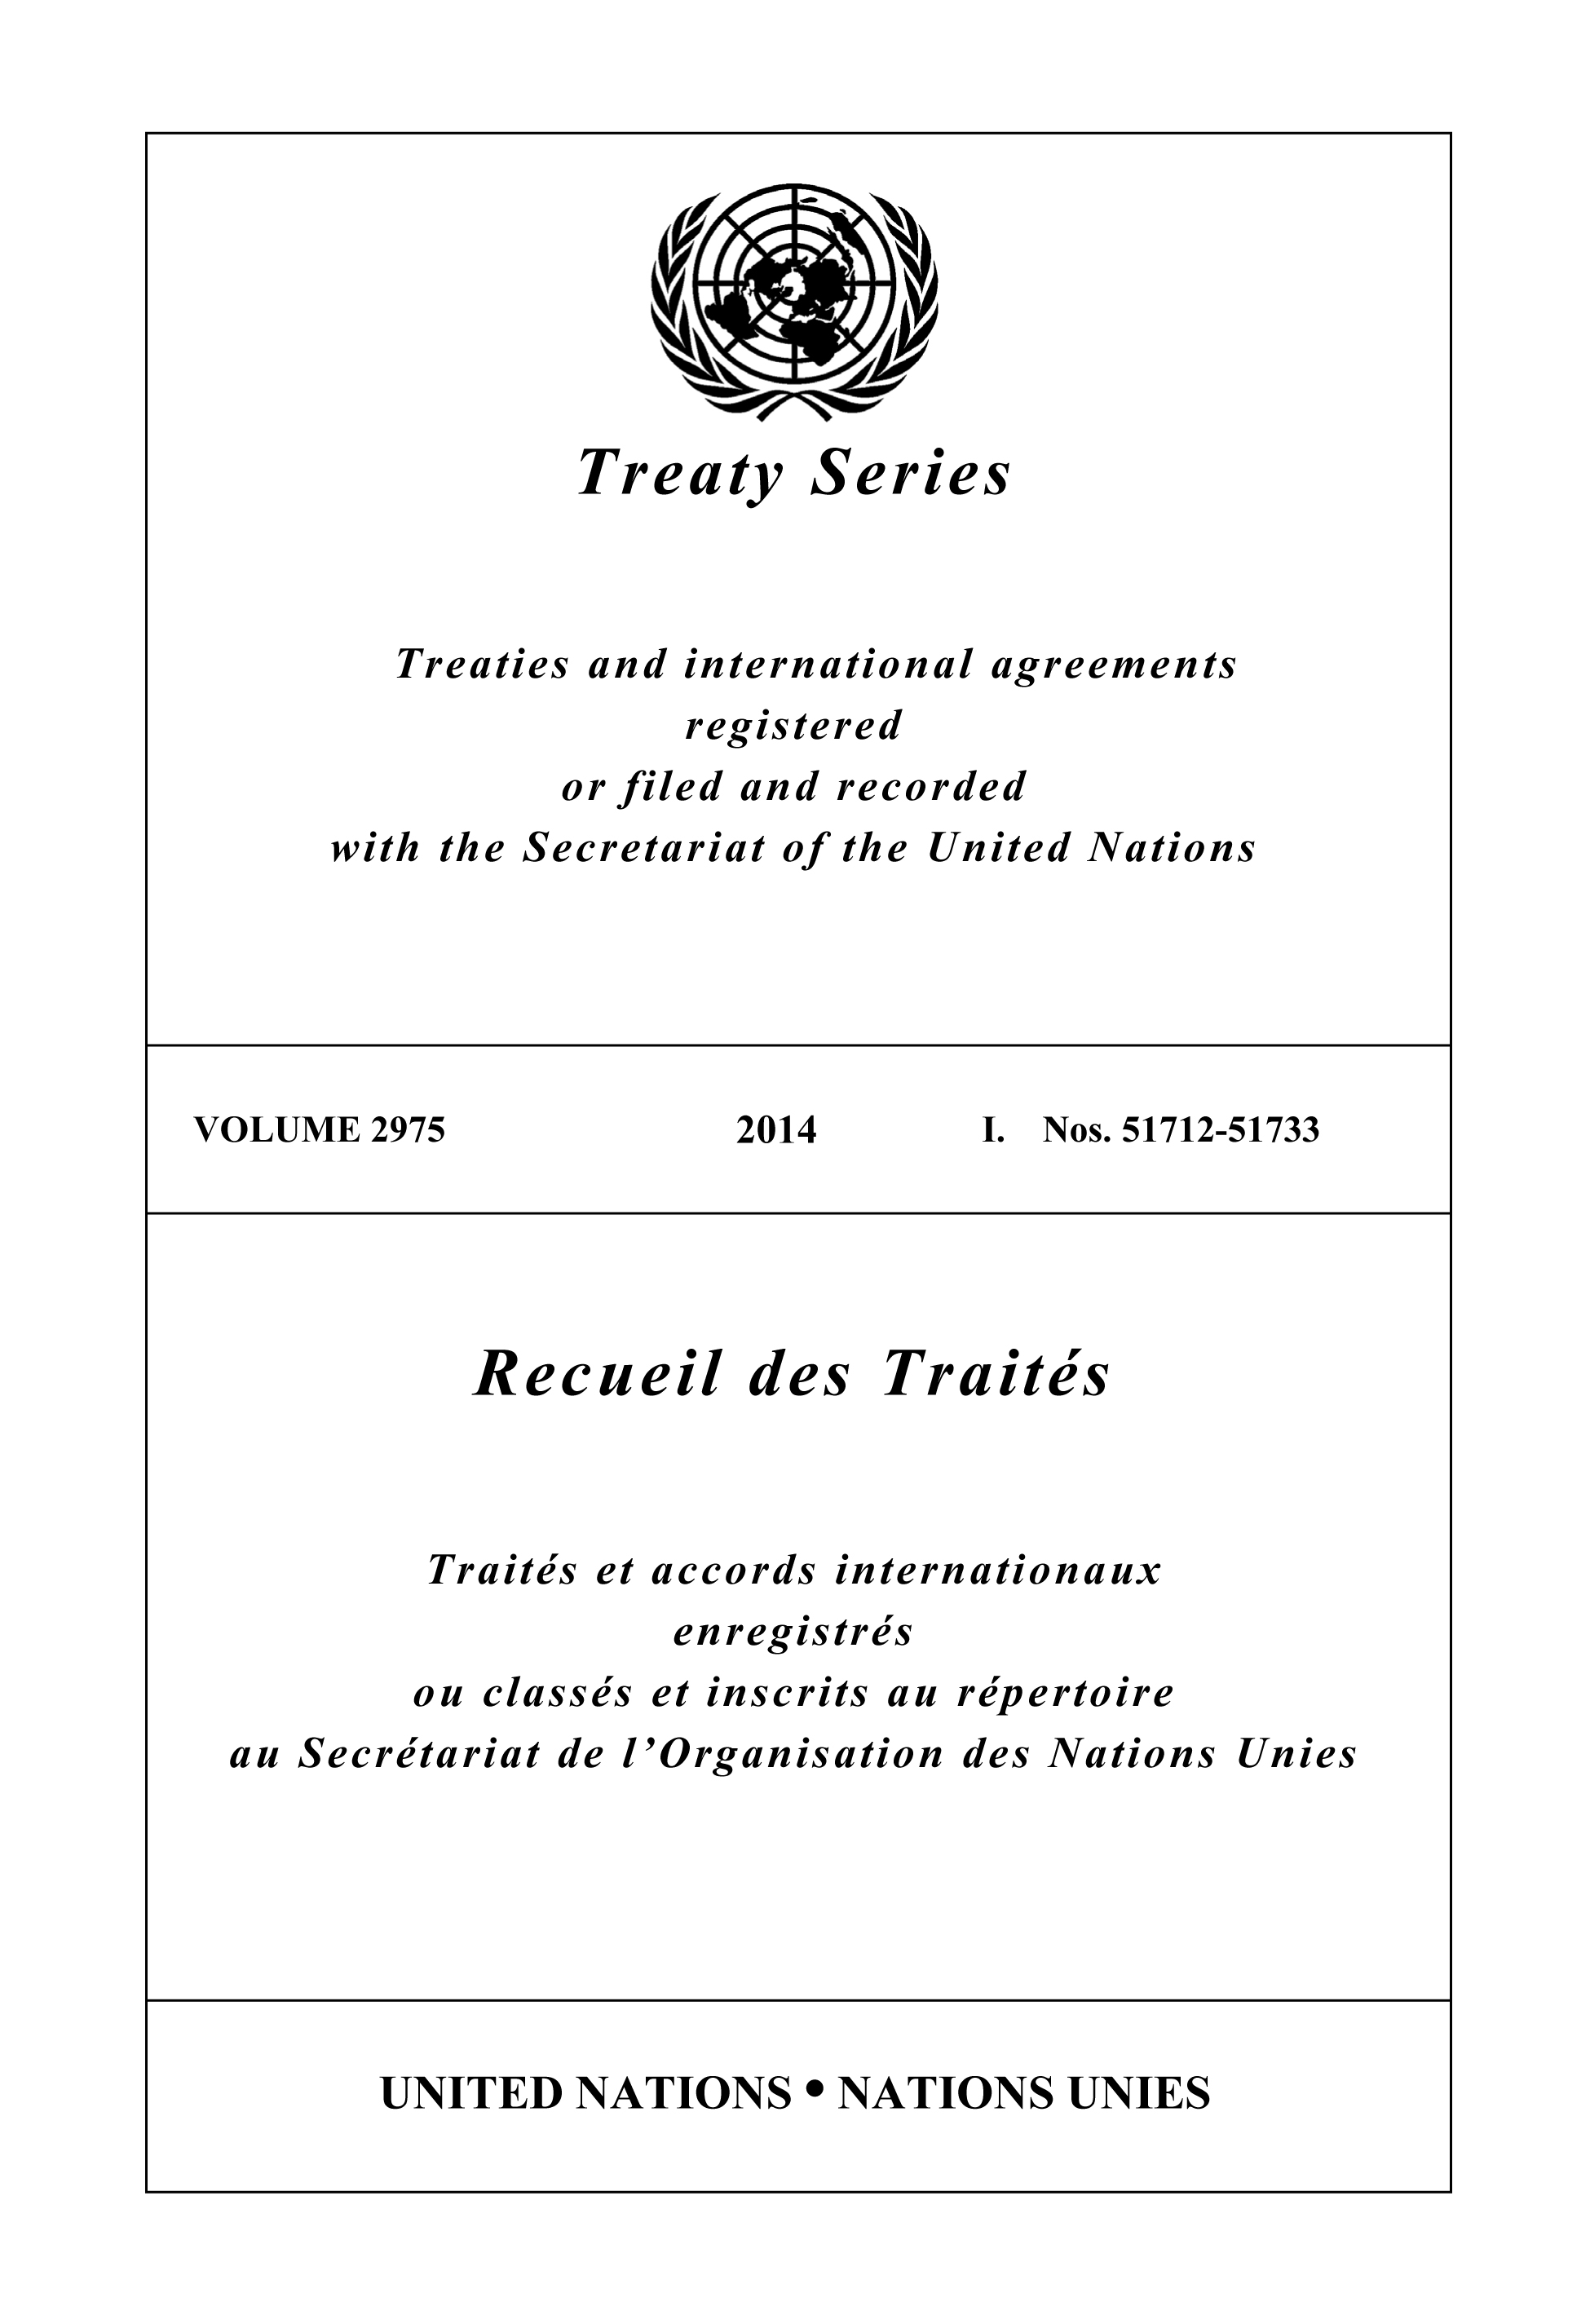 image of Treaty Series 2975